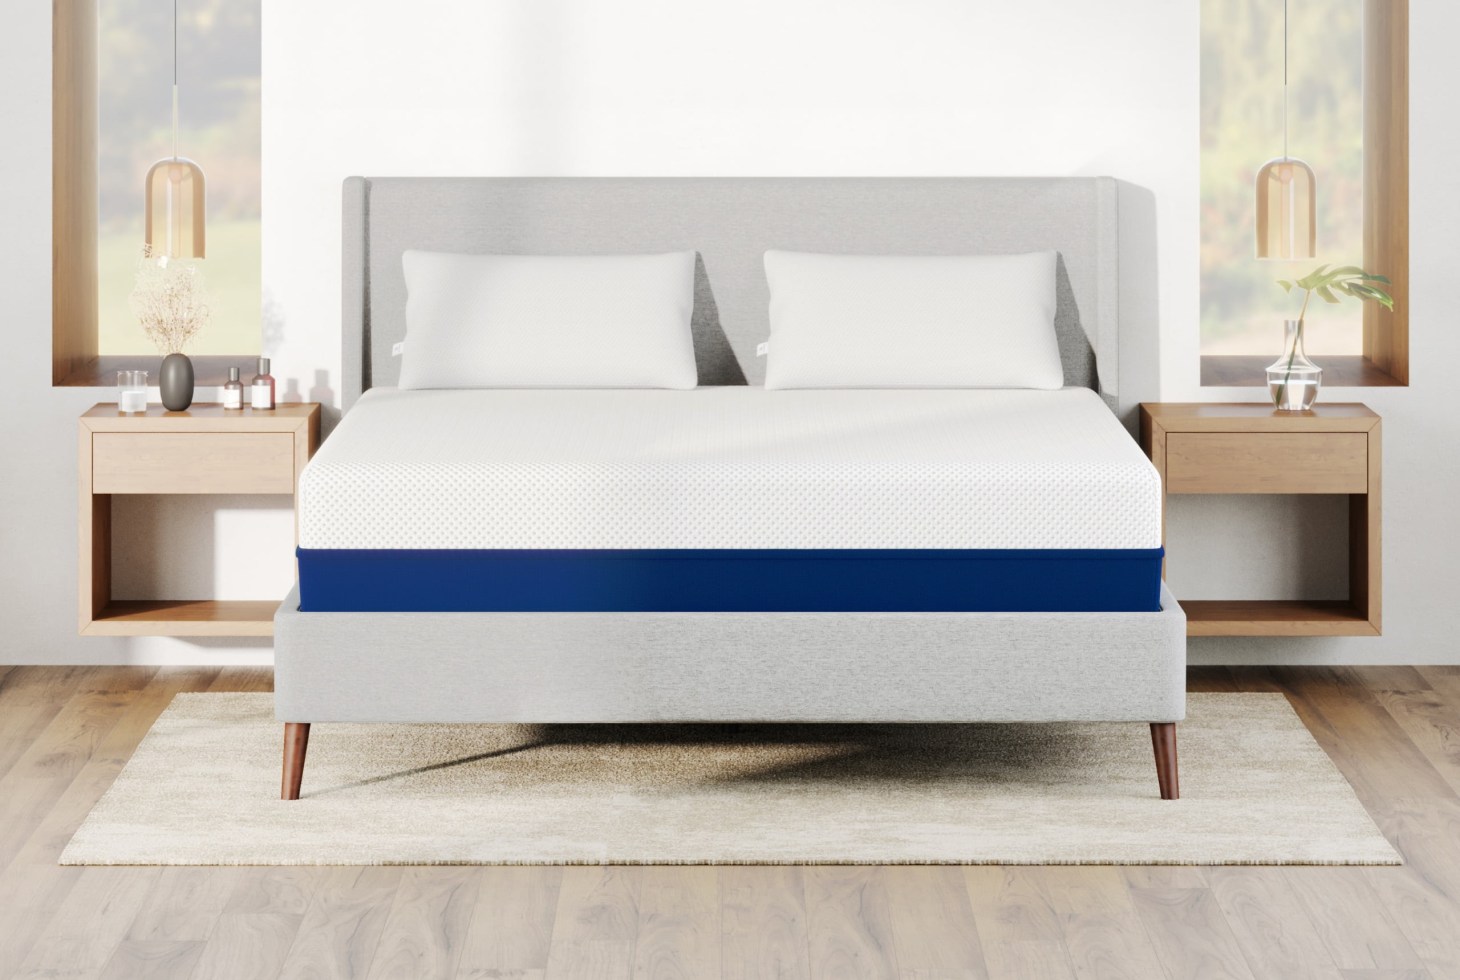 amerisleep a3 mattress, on sale for 4th of july